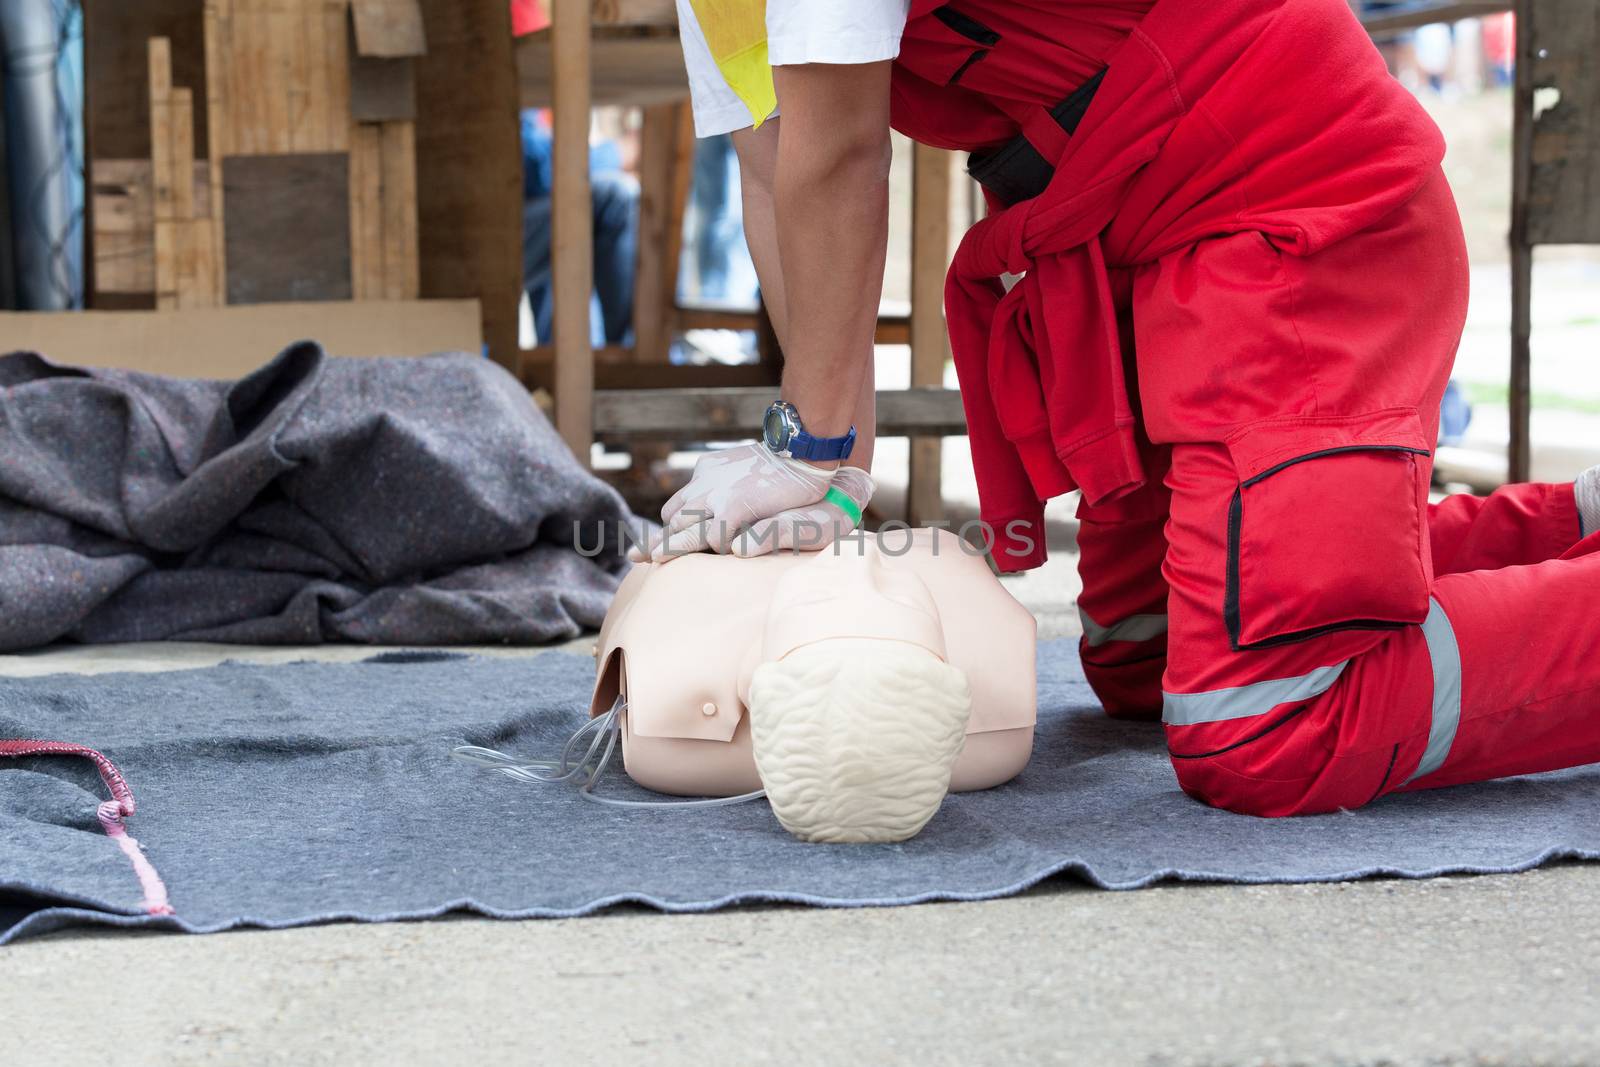 First aid training detail. Cardiopulmonary resuscitation - CPR.